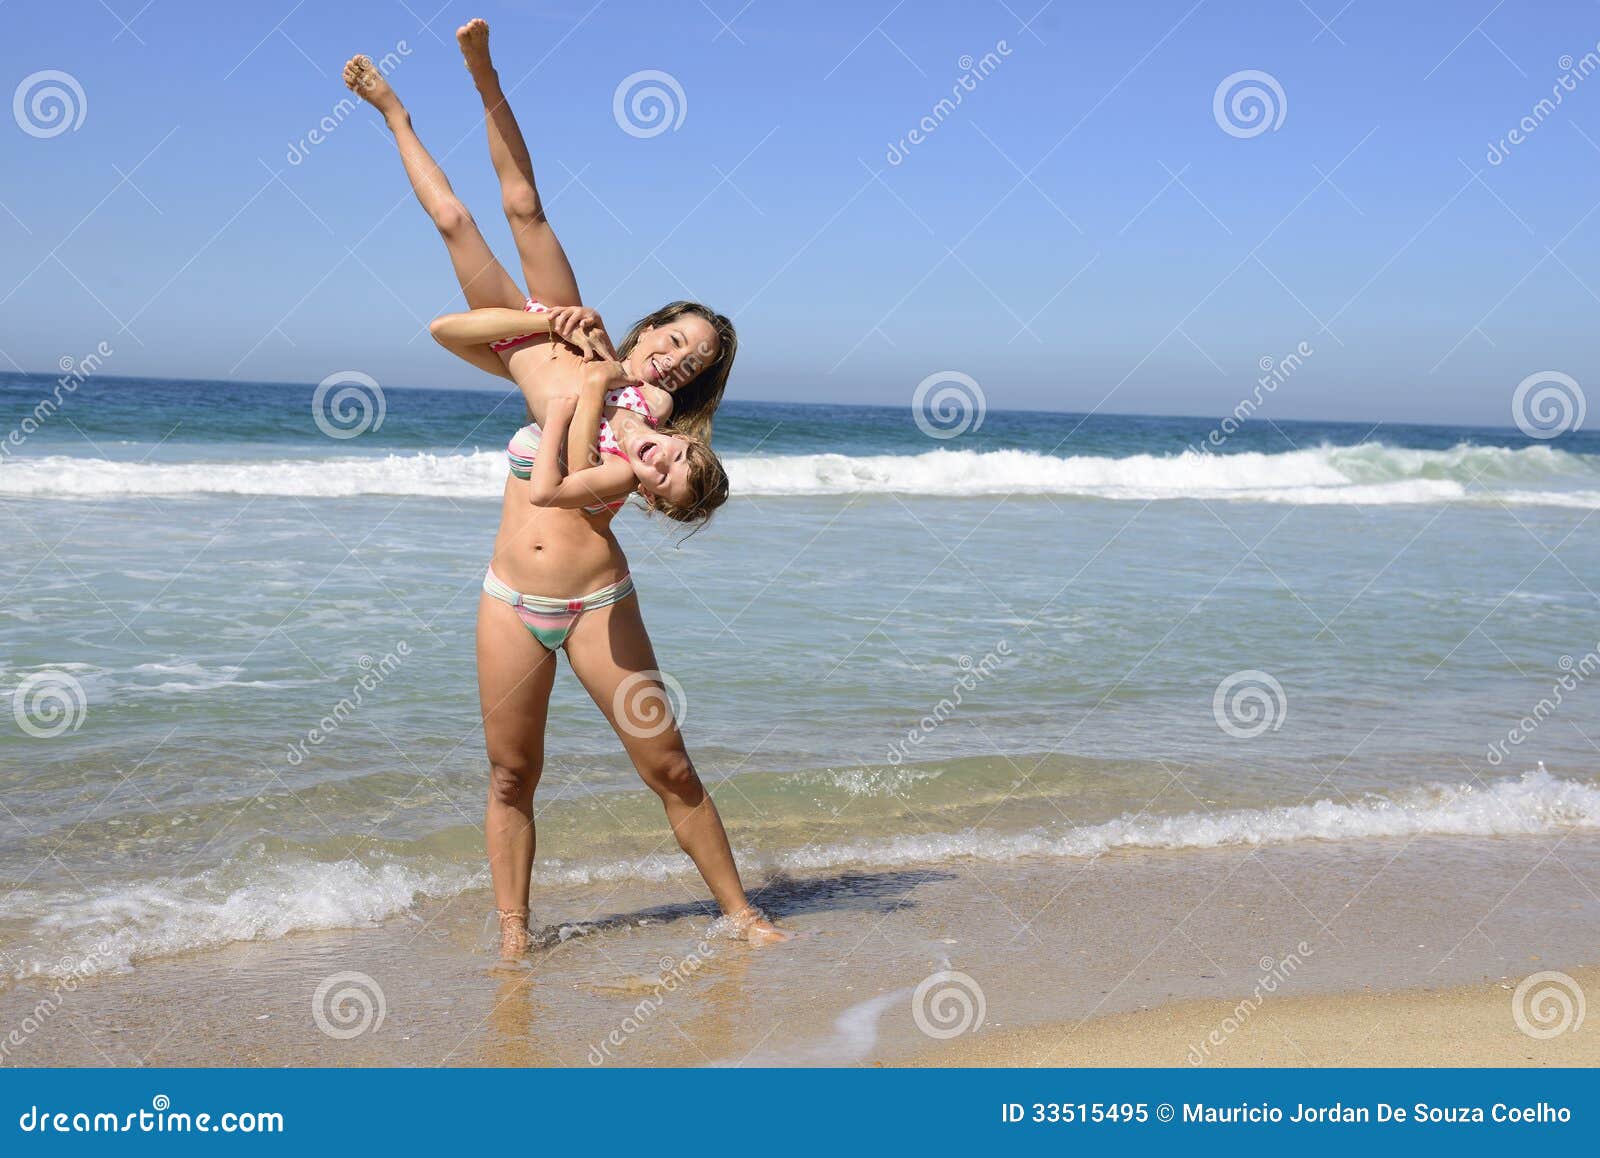 мама и дочка на голом пляже фото 78